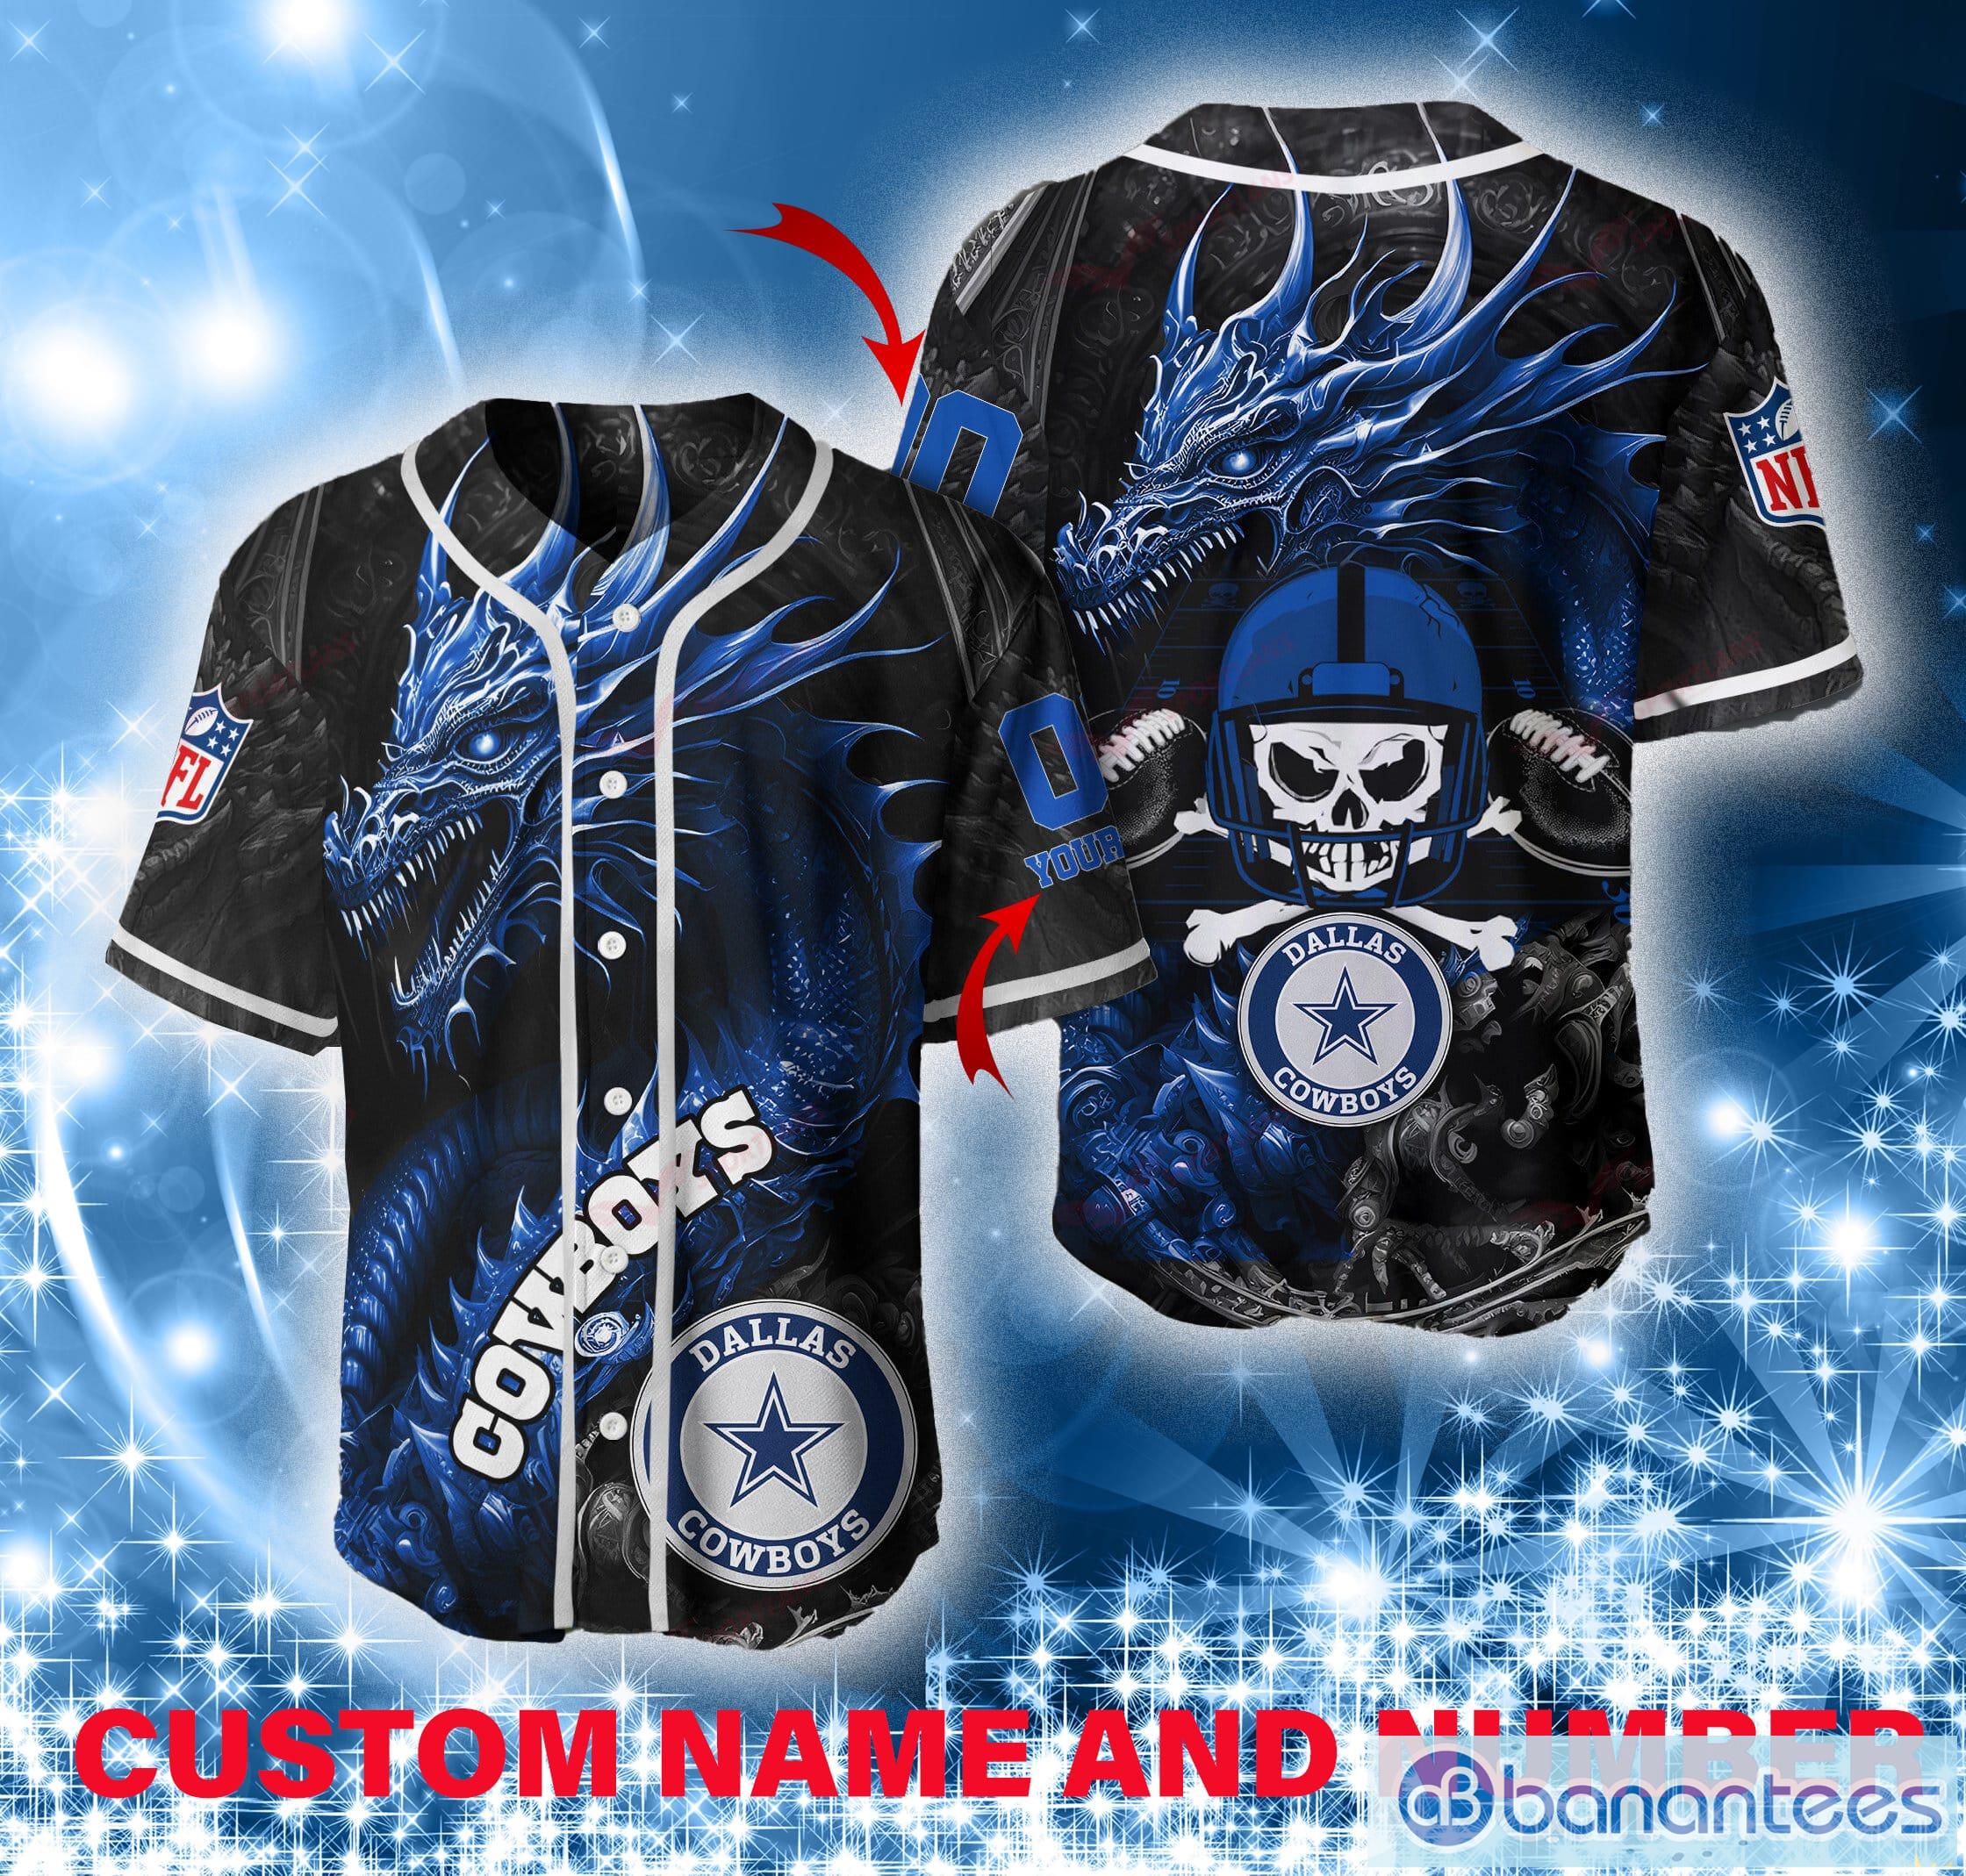 Dallas Cowboys Custom Number And Name NFL 3D Baseball Jersey Shirt Skull  For Fans Gift Halloween - Banantees